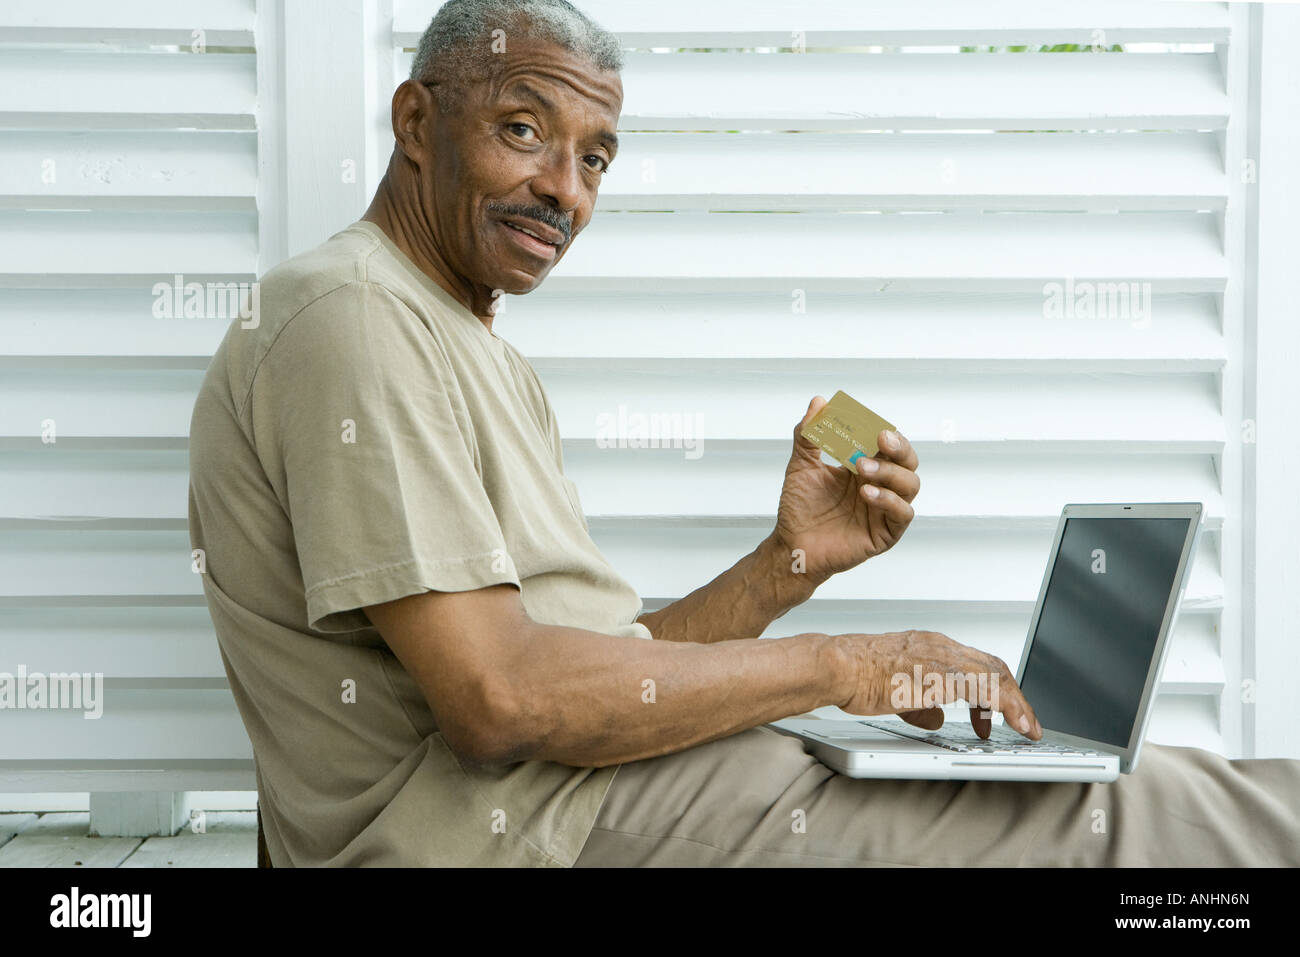 Senior man making credit card purchase online, smiling at camera Stock Photo